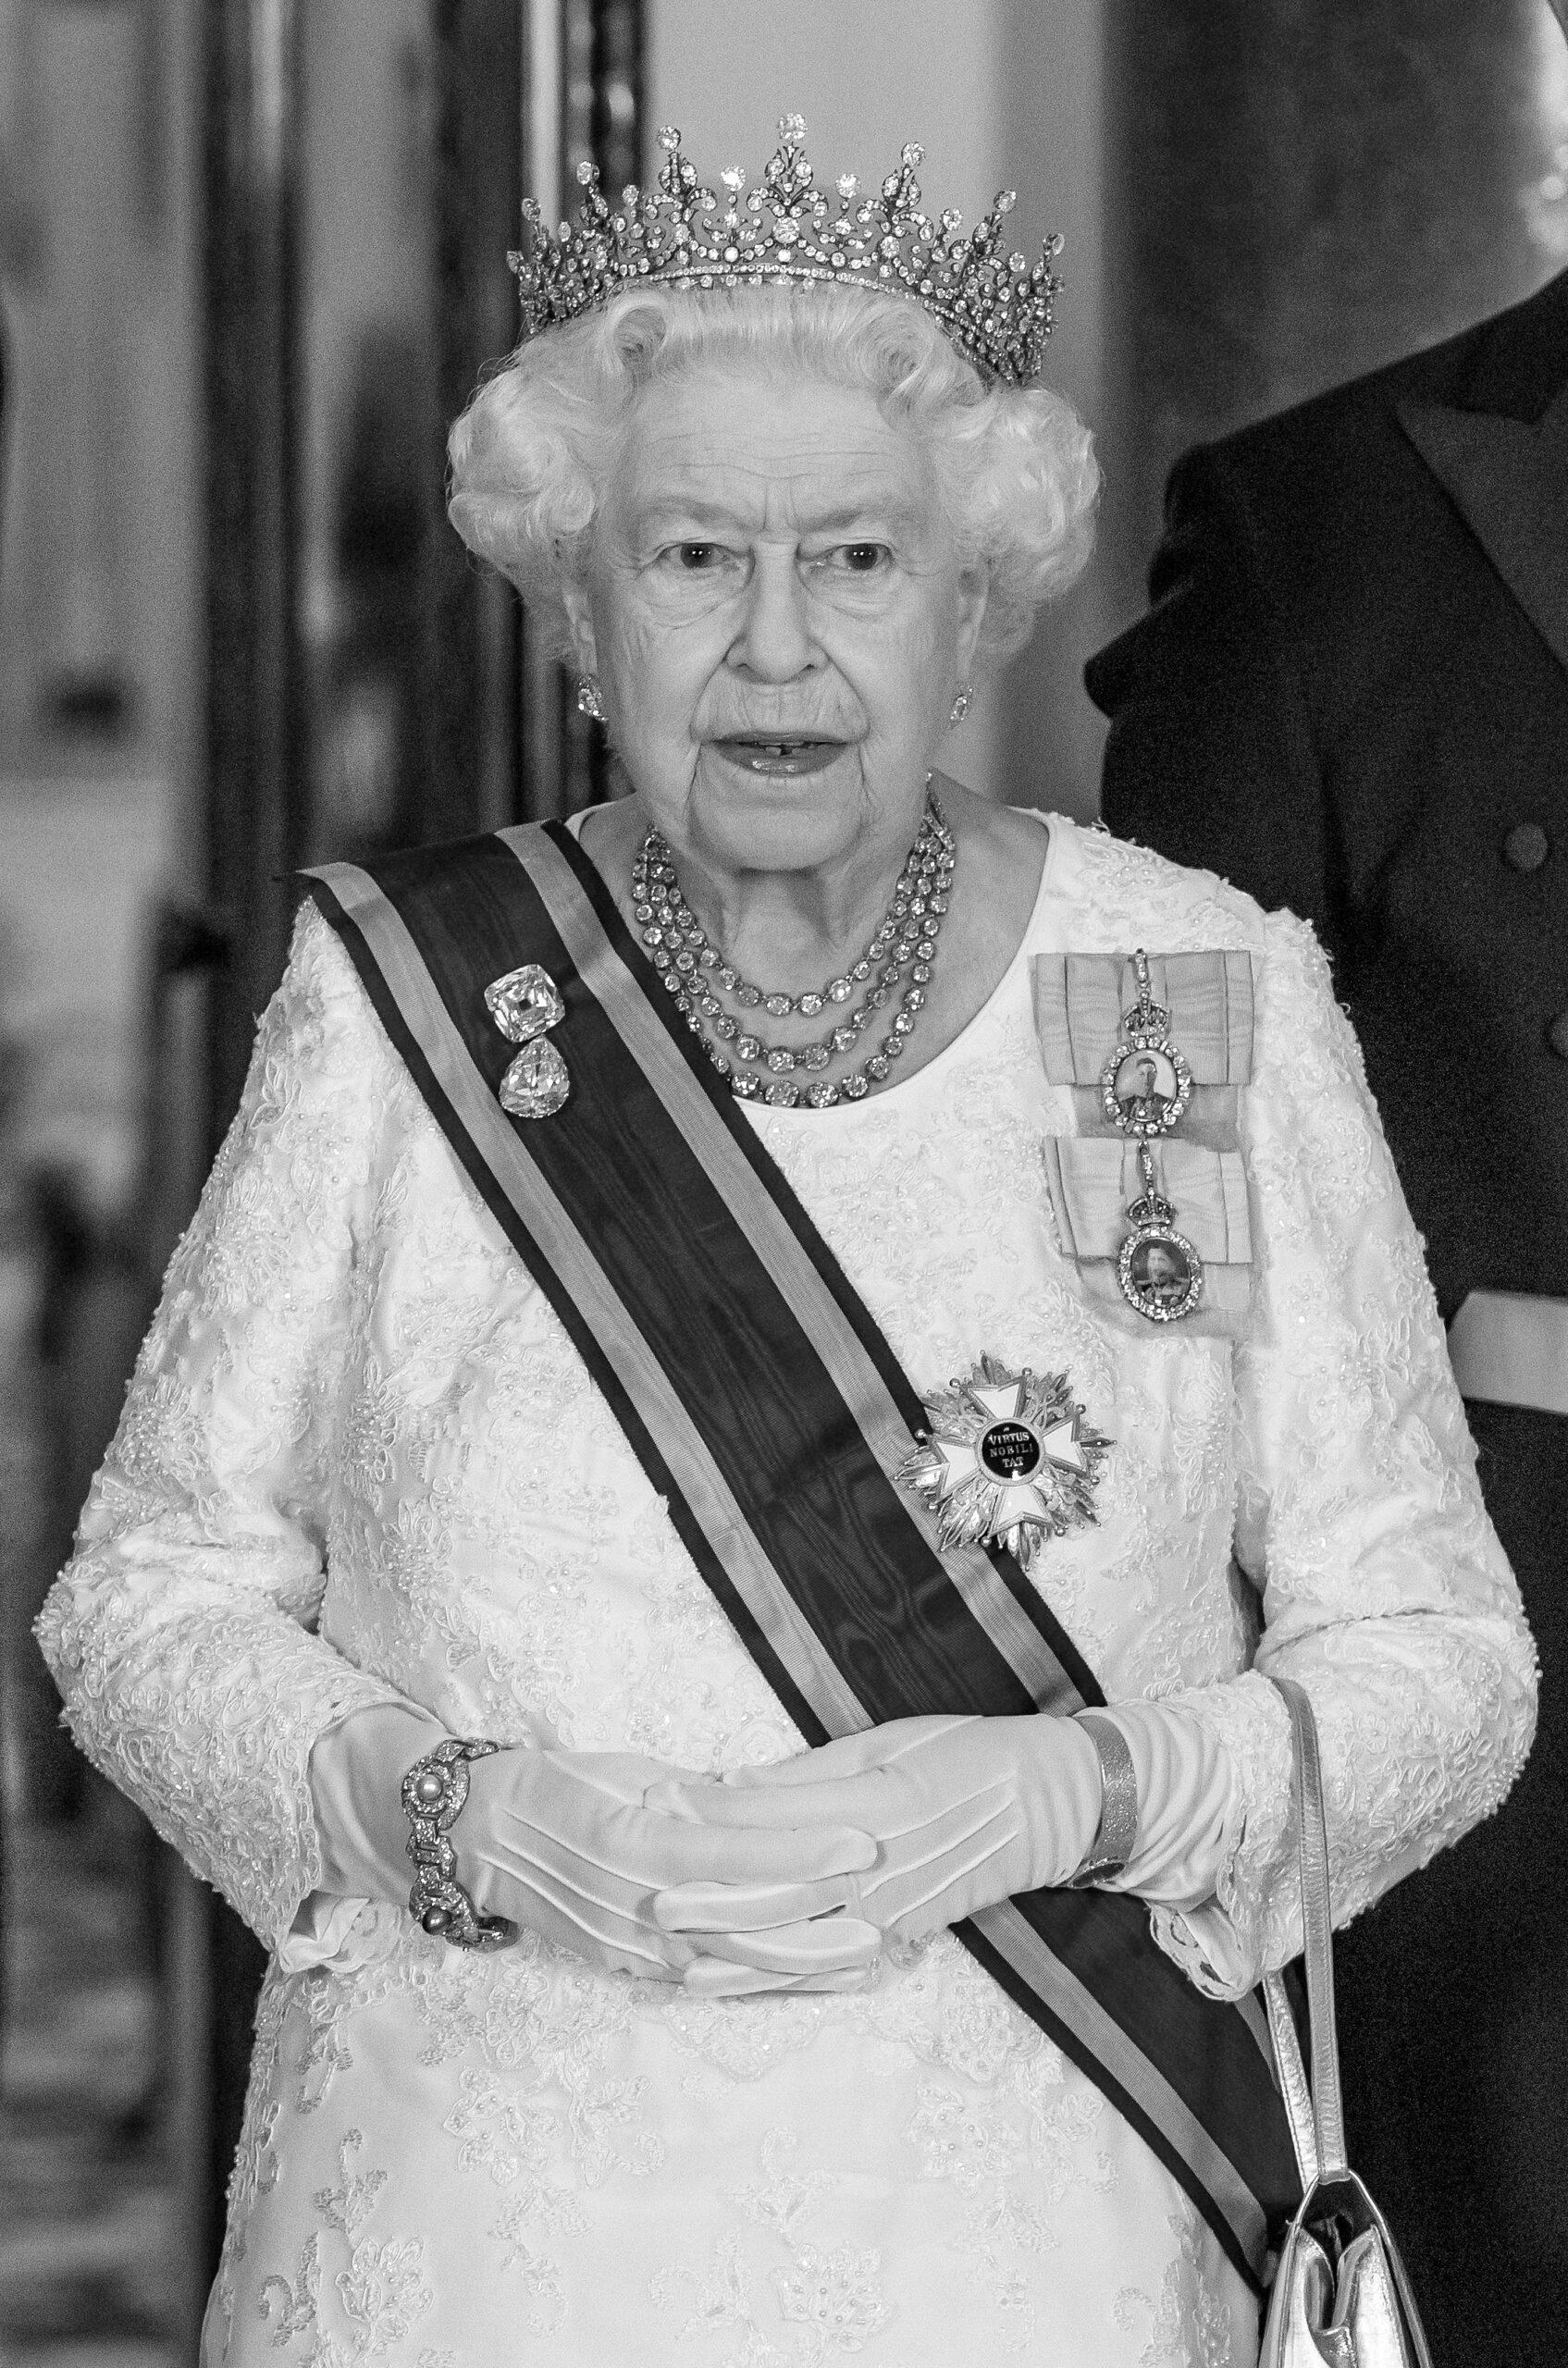 Queen Elizabeth dies aged 96 - 8 Sep 2022